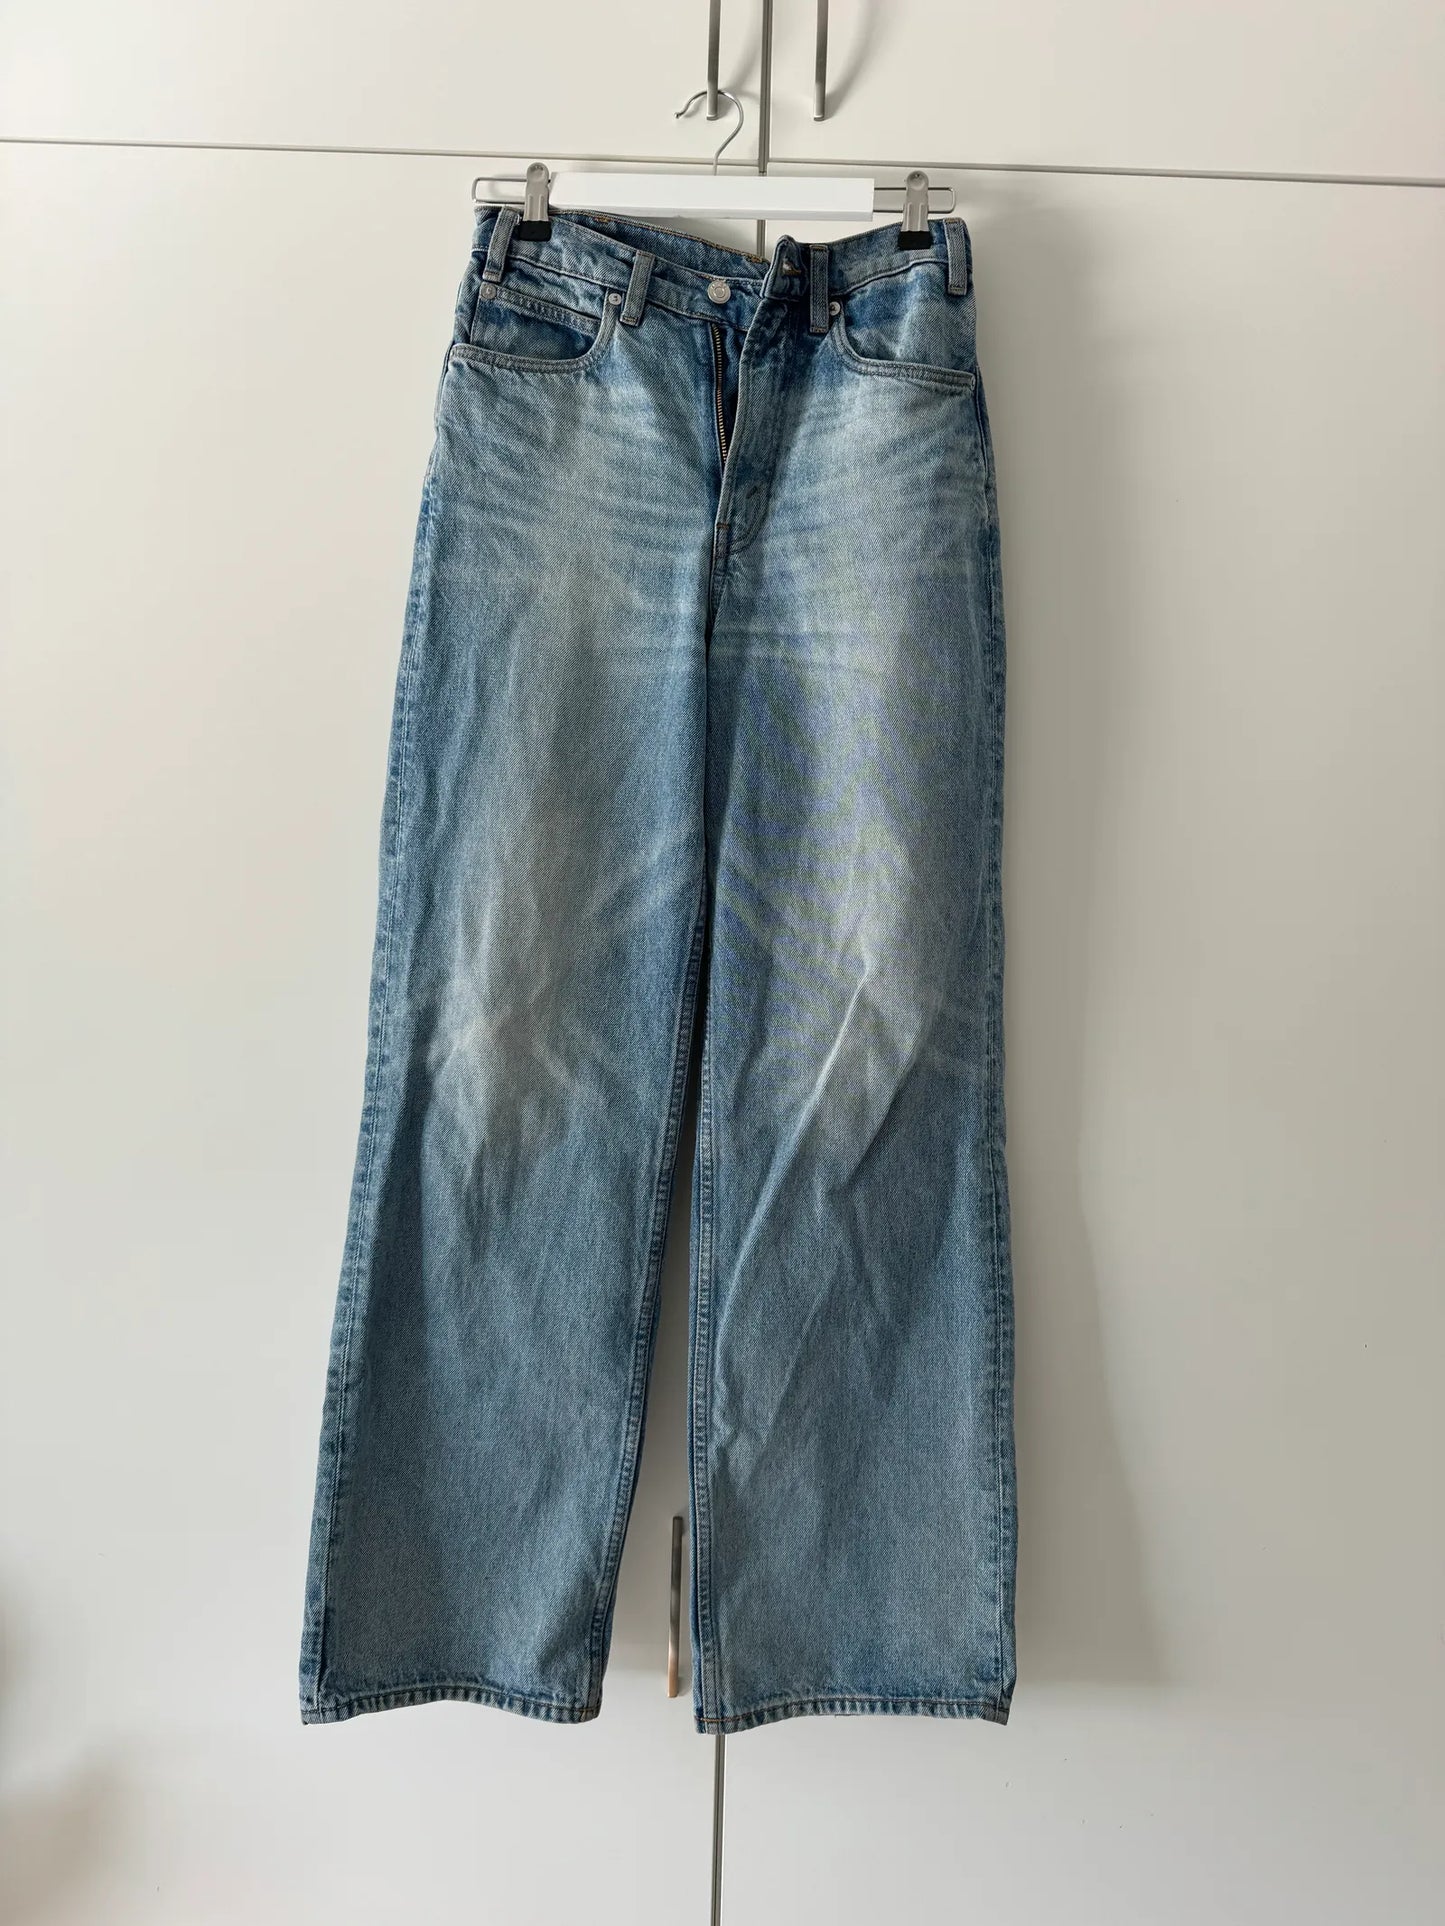 Arket Maple-jeans